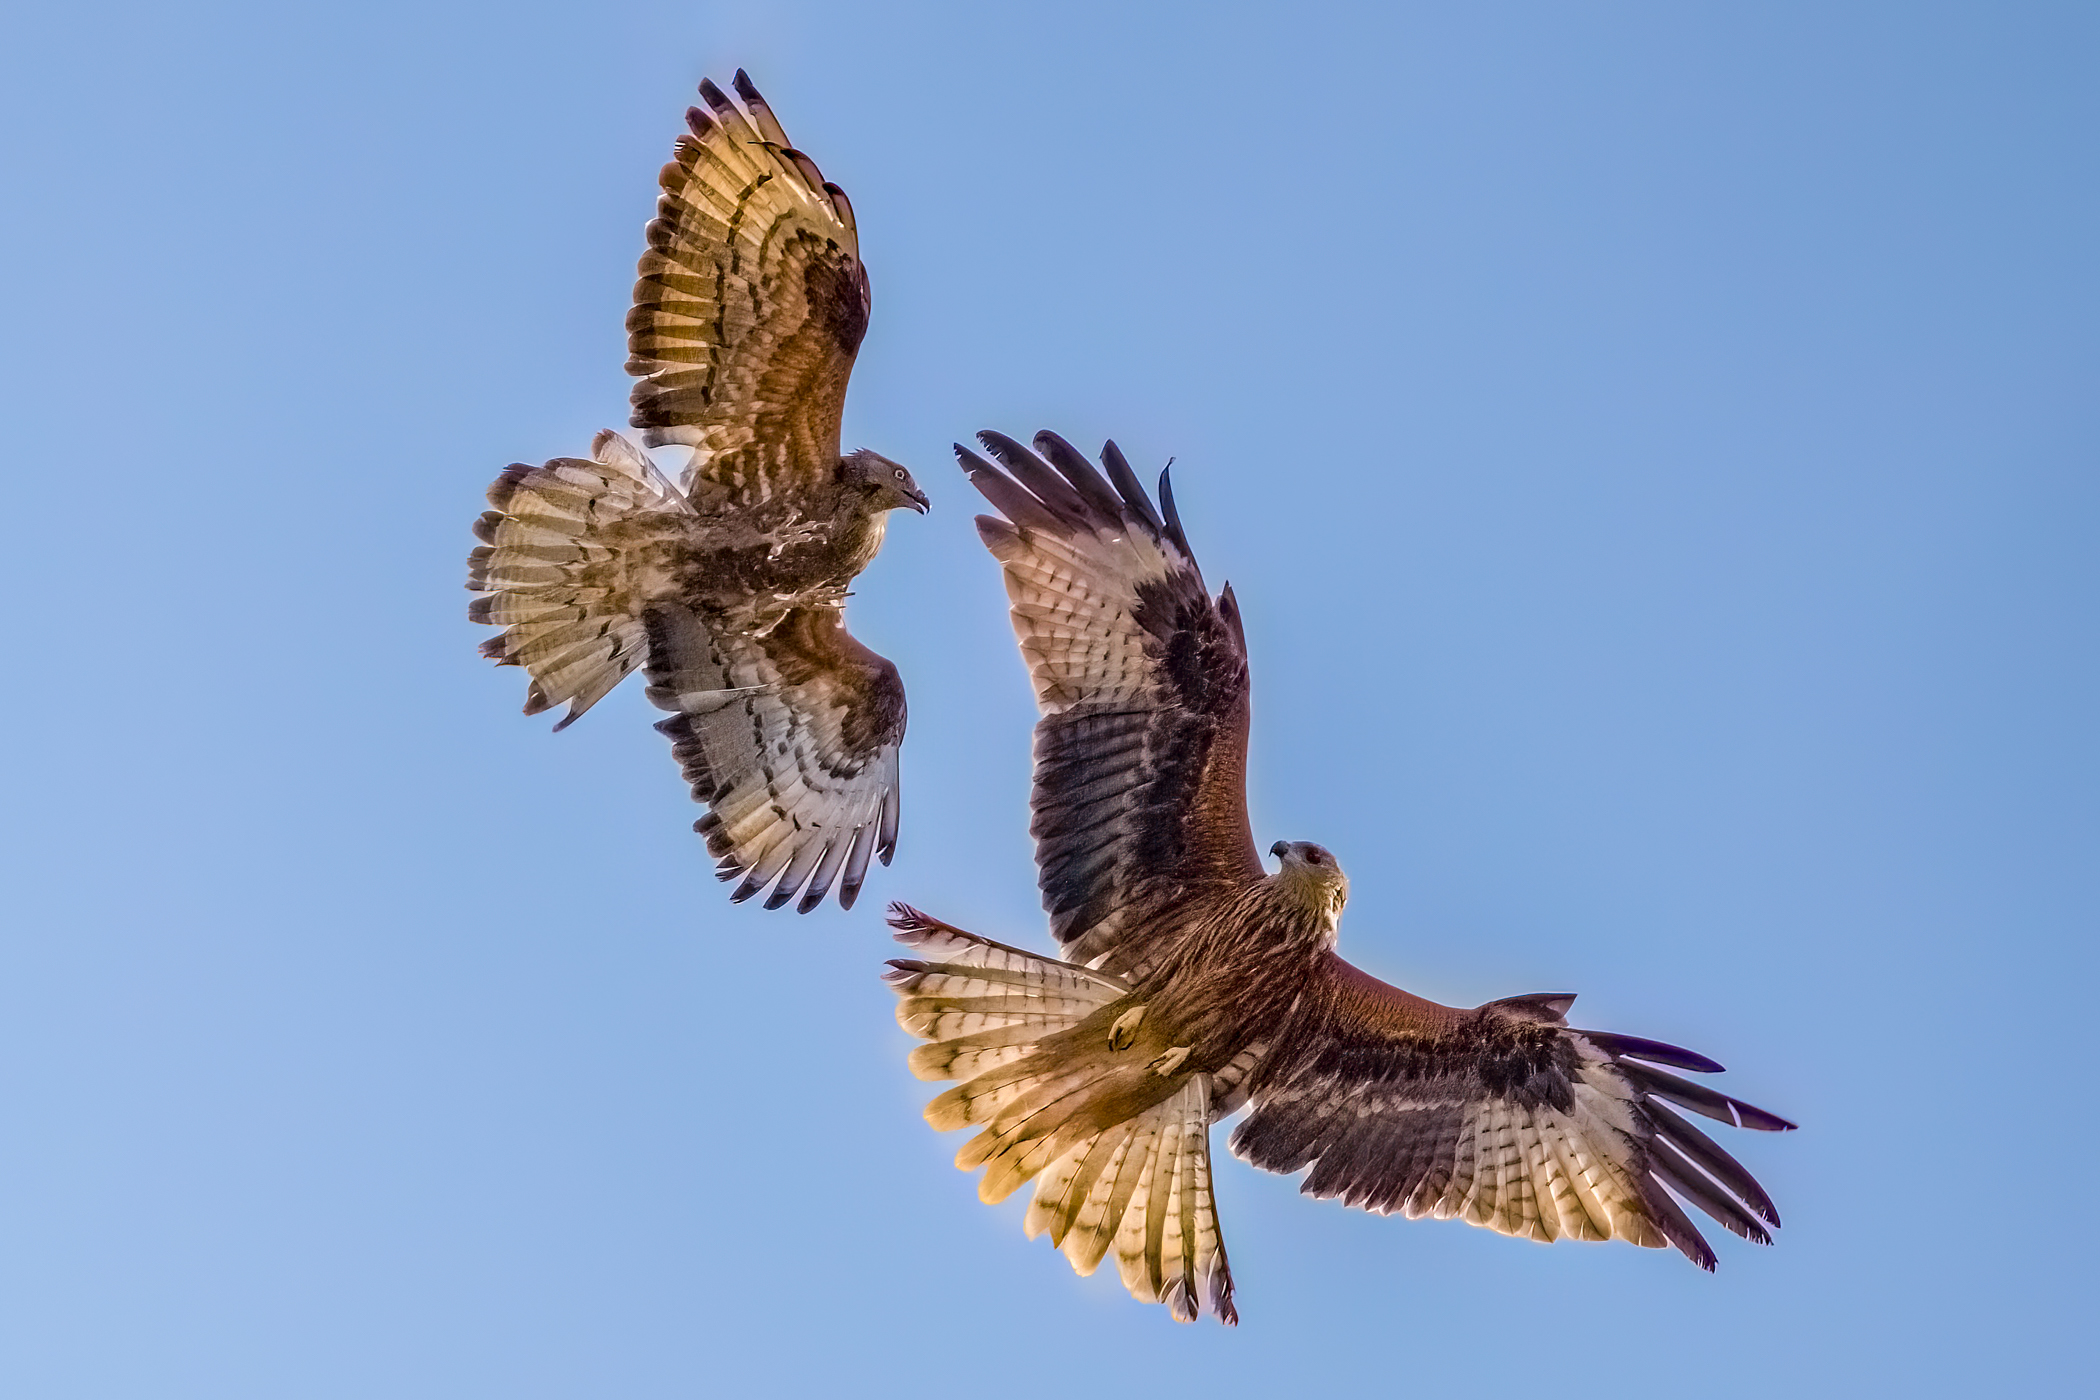 Honey buzzard vs Red kite...